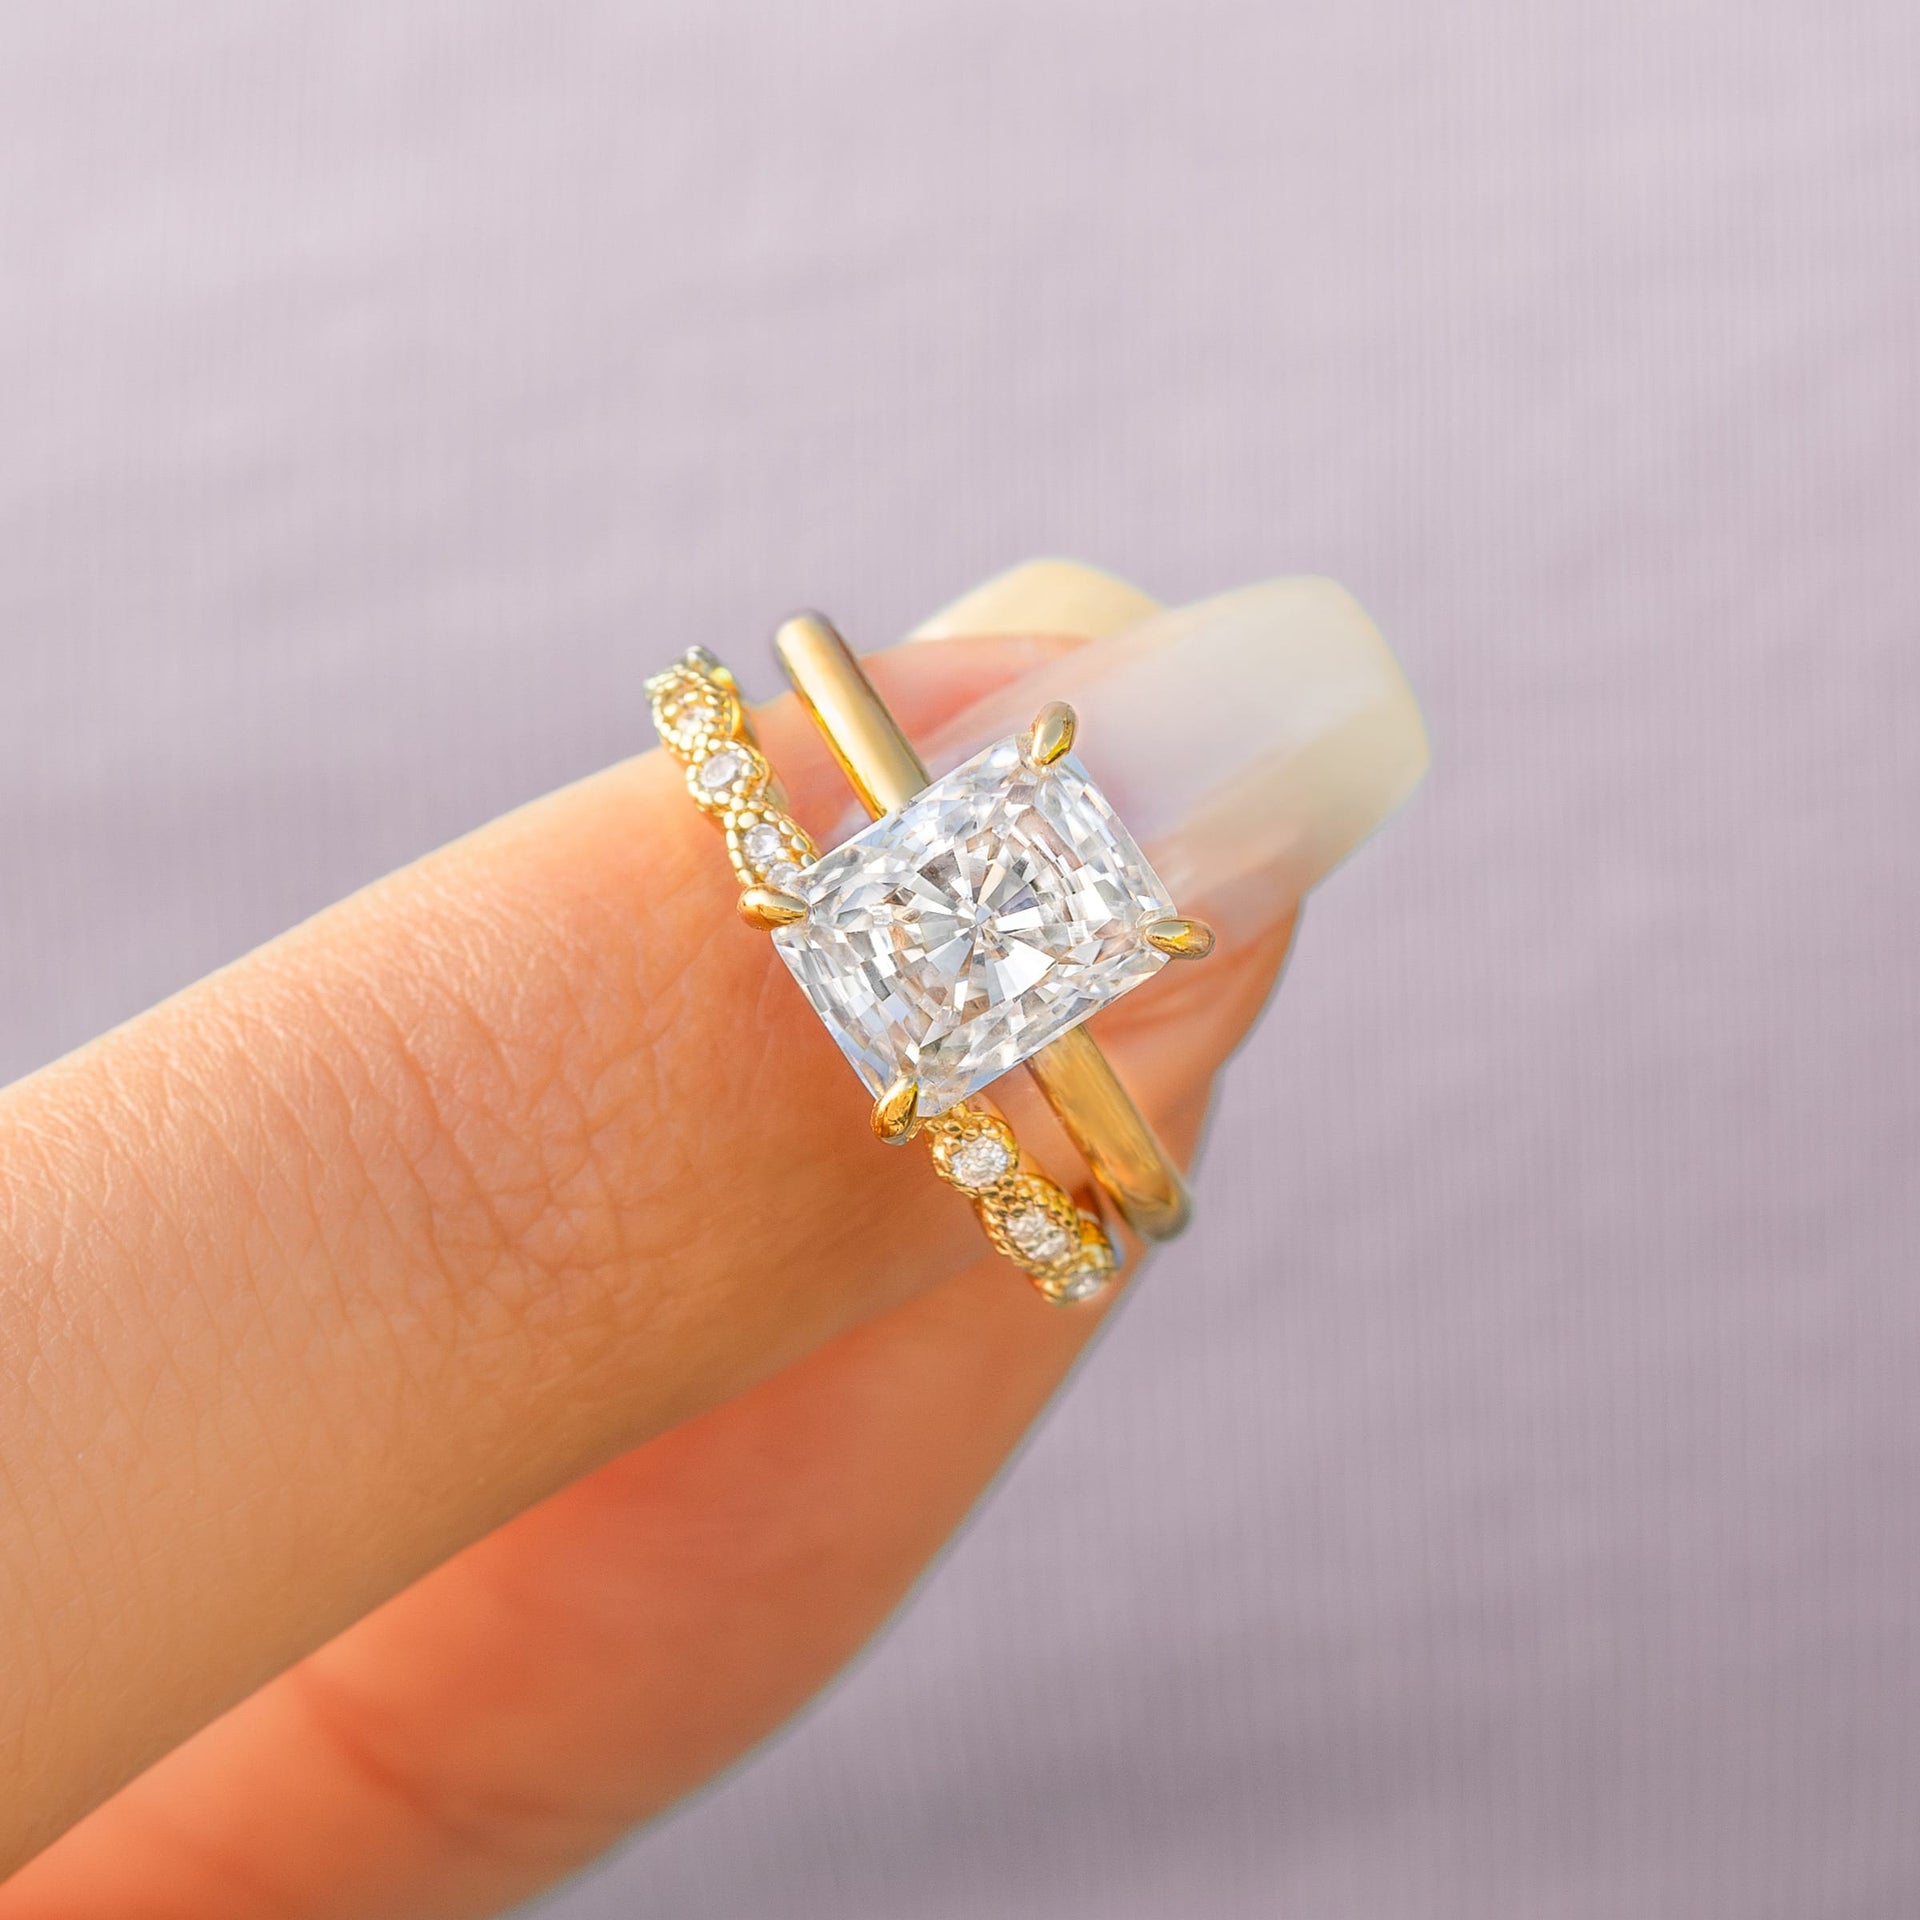 woman pinching gold engagement ring and wedding band